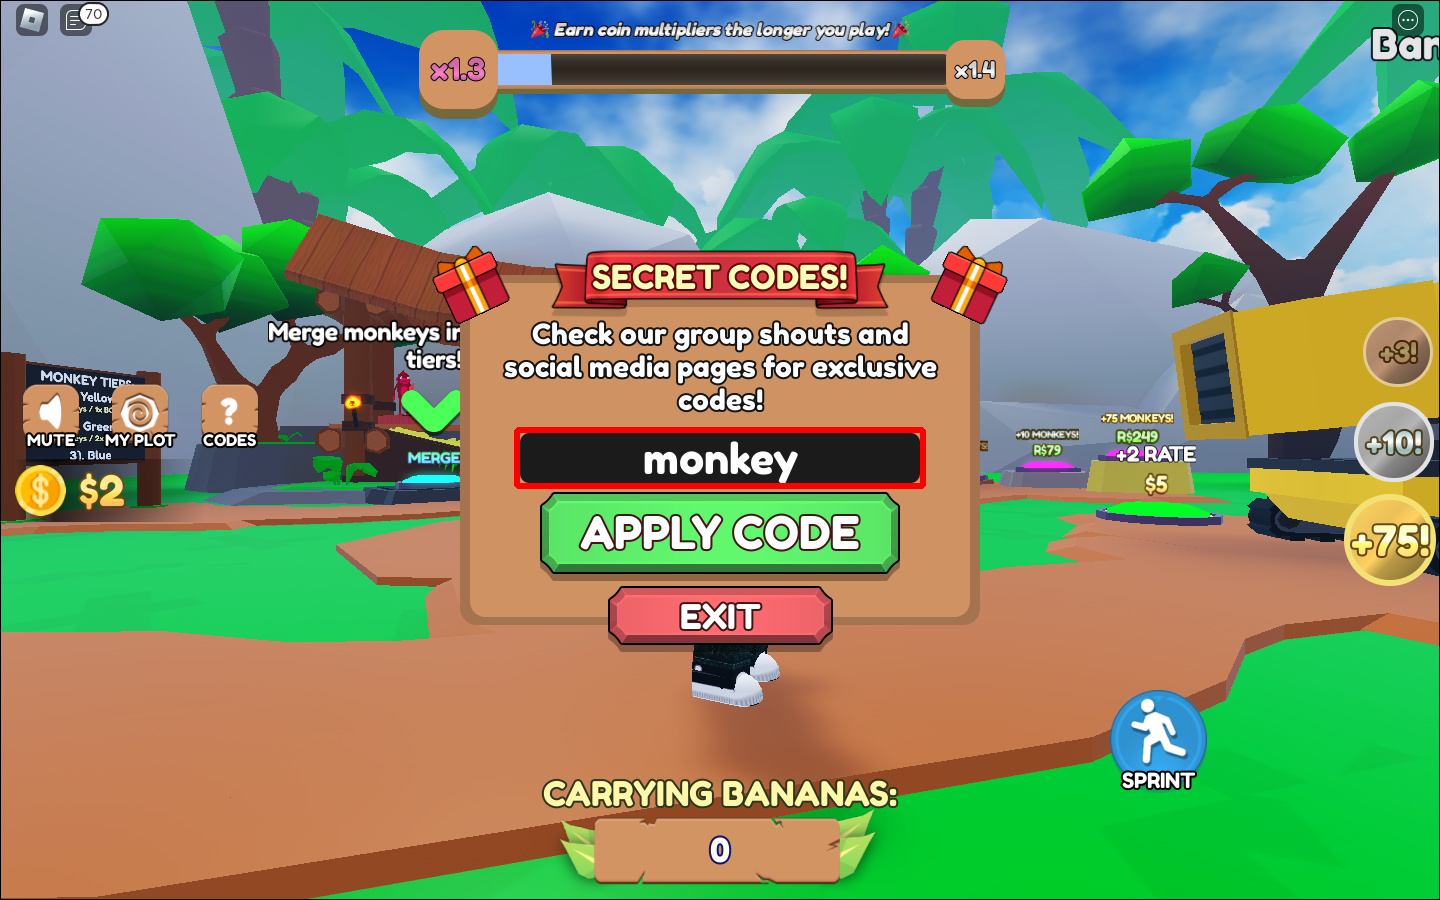 Monkey Tycoon codes